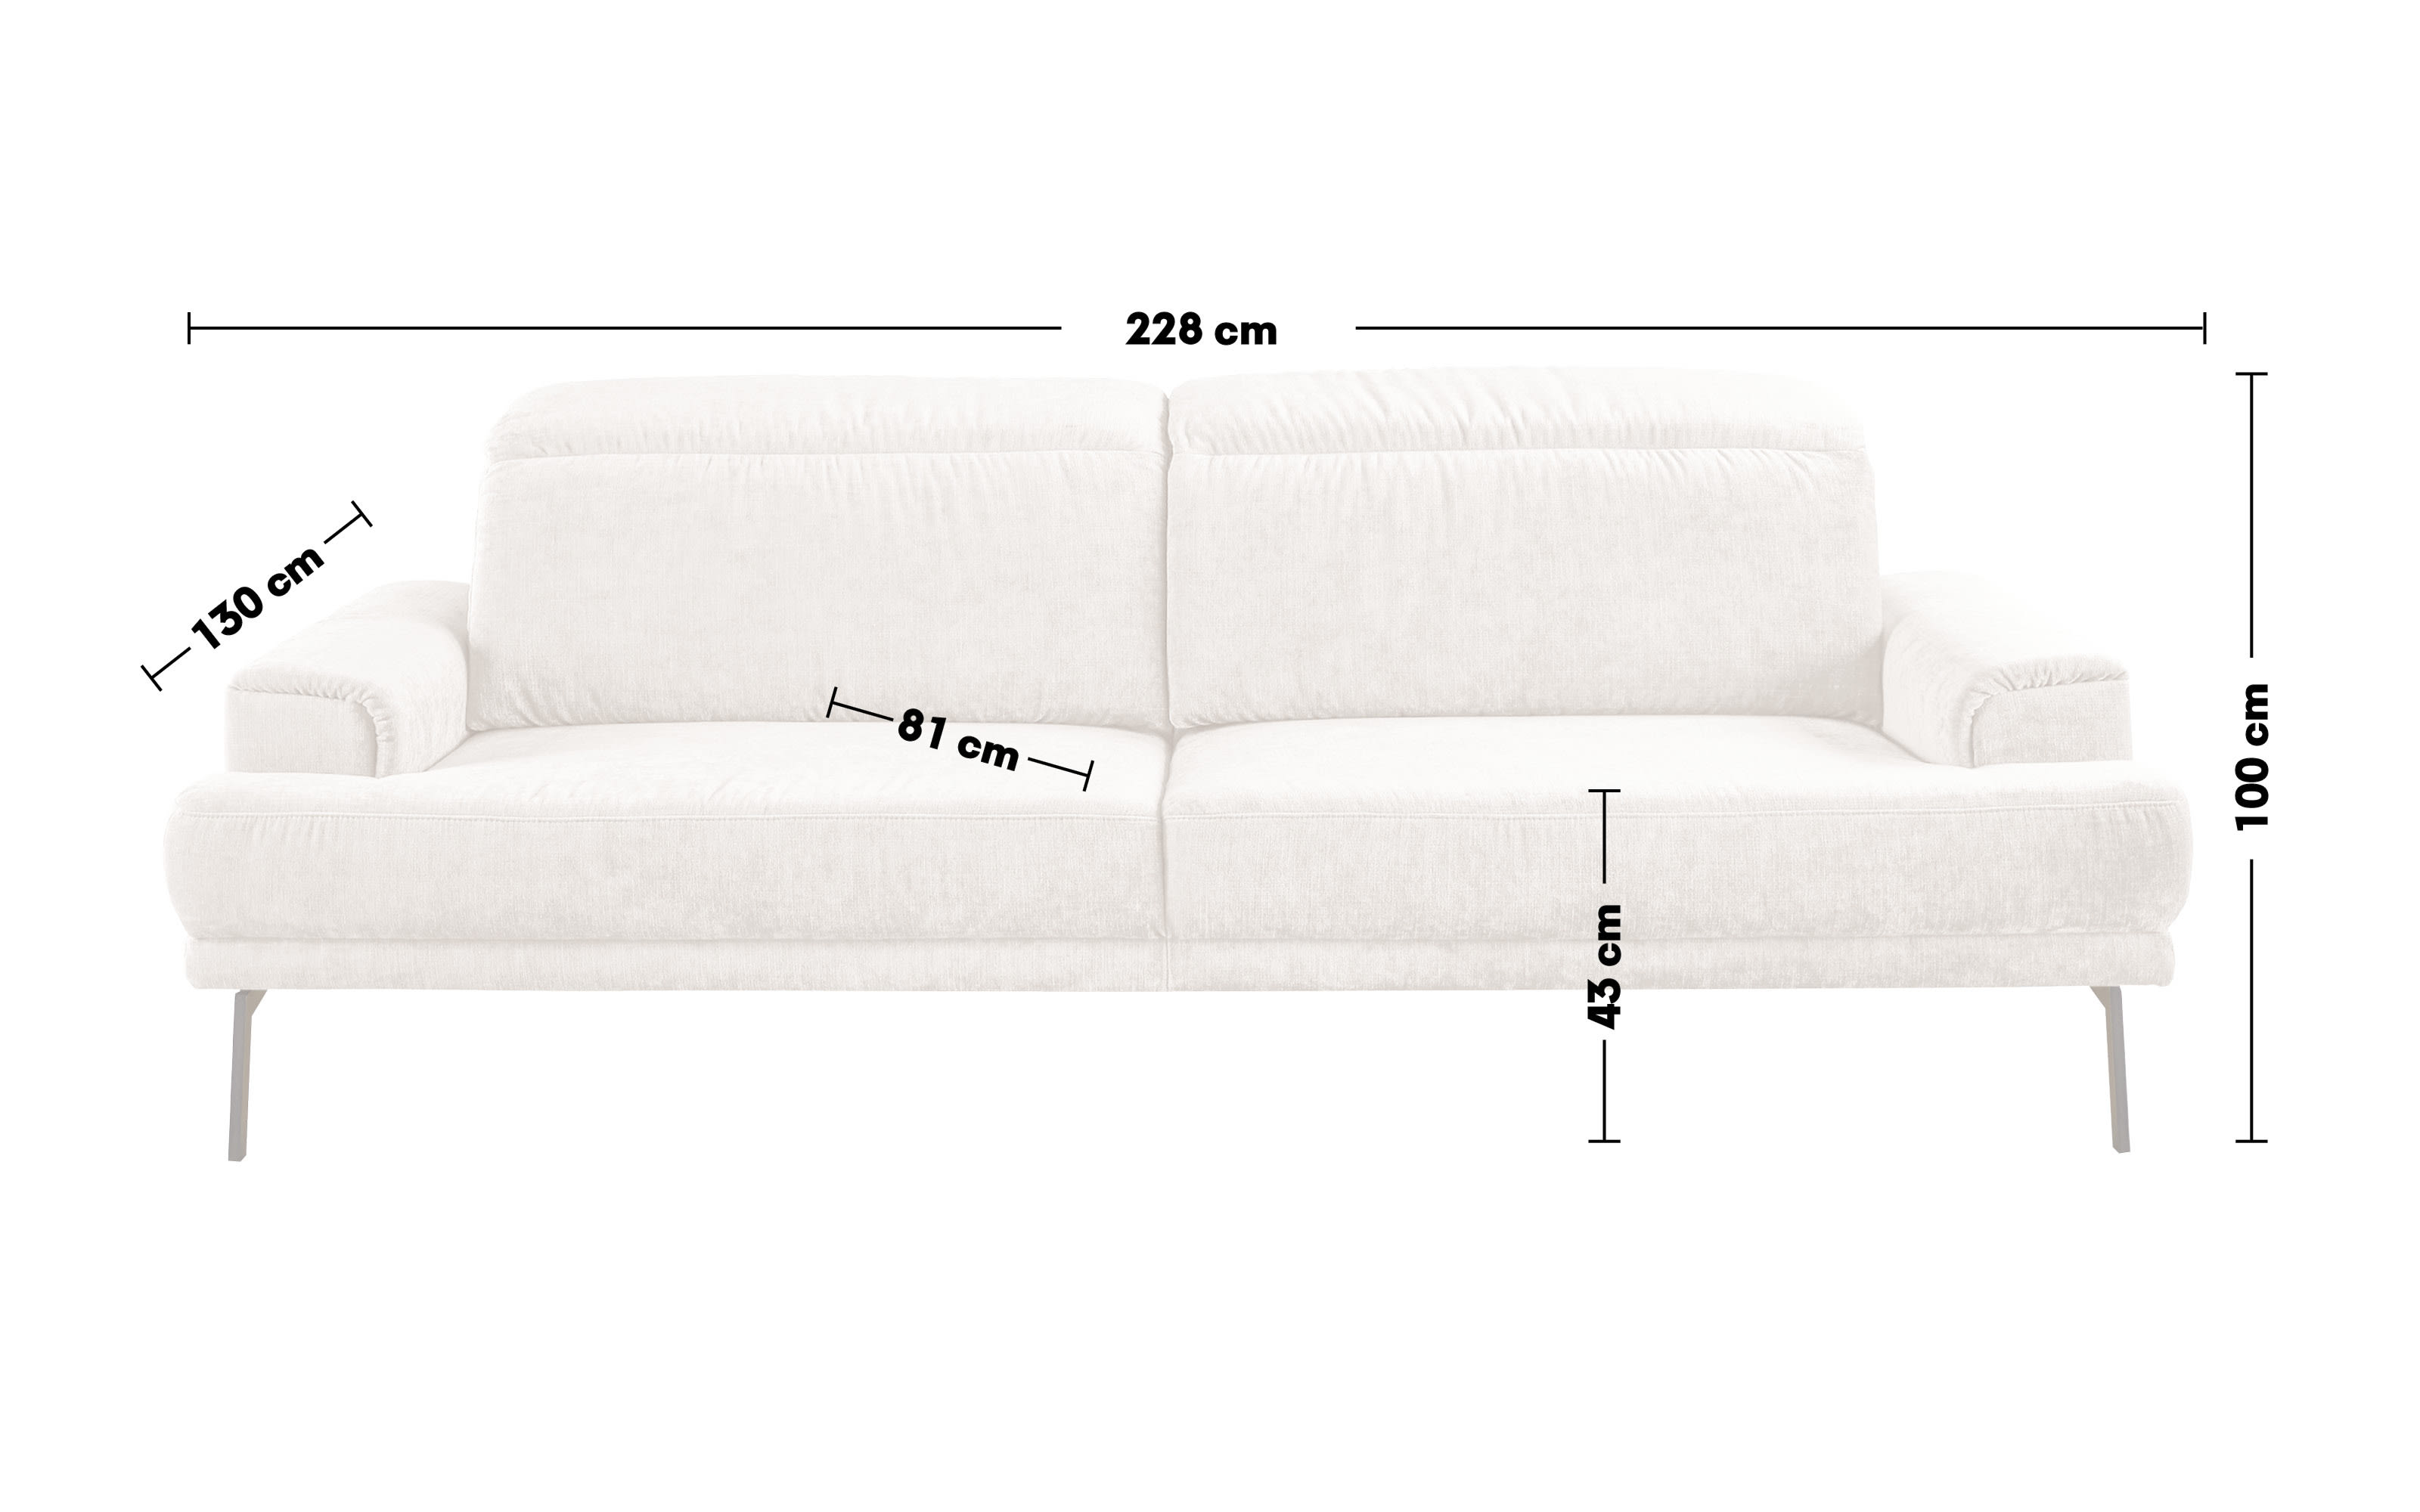 Sofa MR 4580, stone, inkl. Funktionen